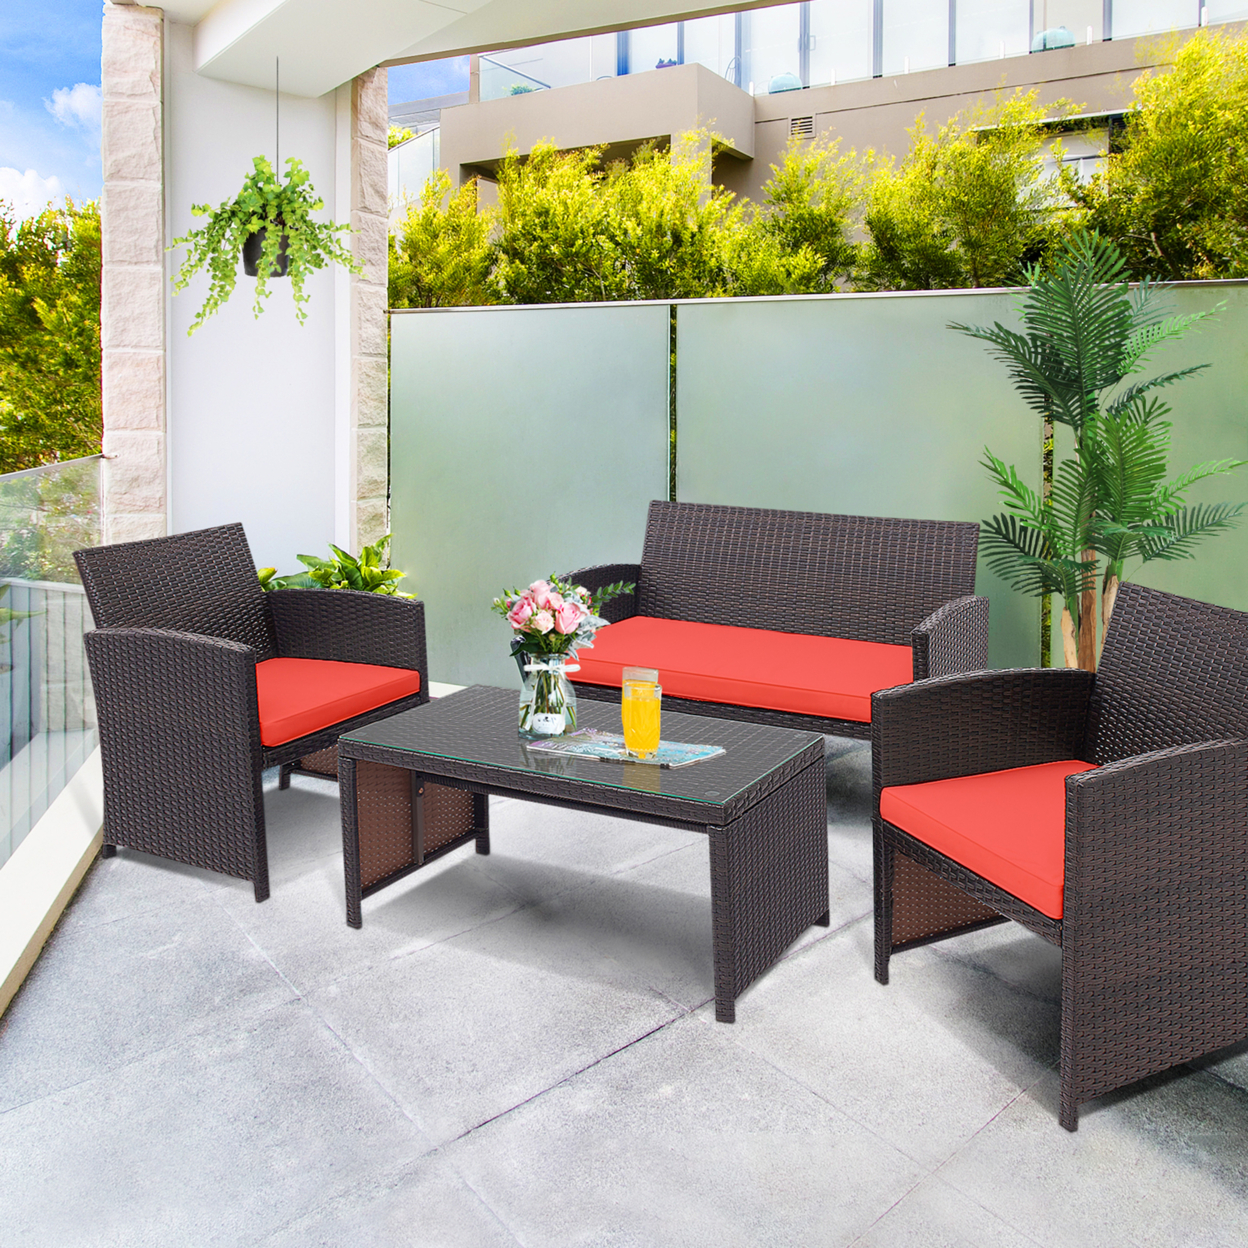 4PCS Patio Conversation Set Outdoor Rattan Furniture Set W/ Red Cushions